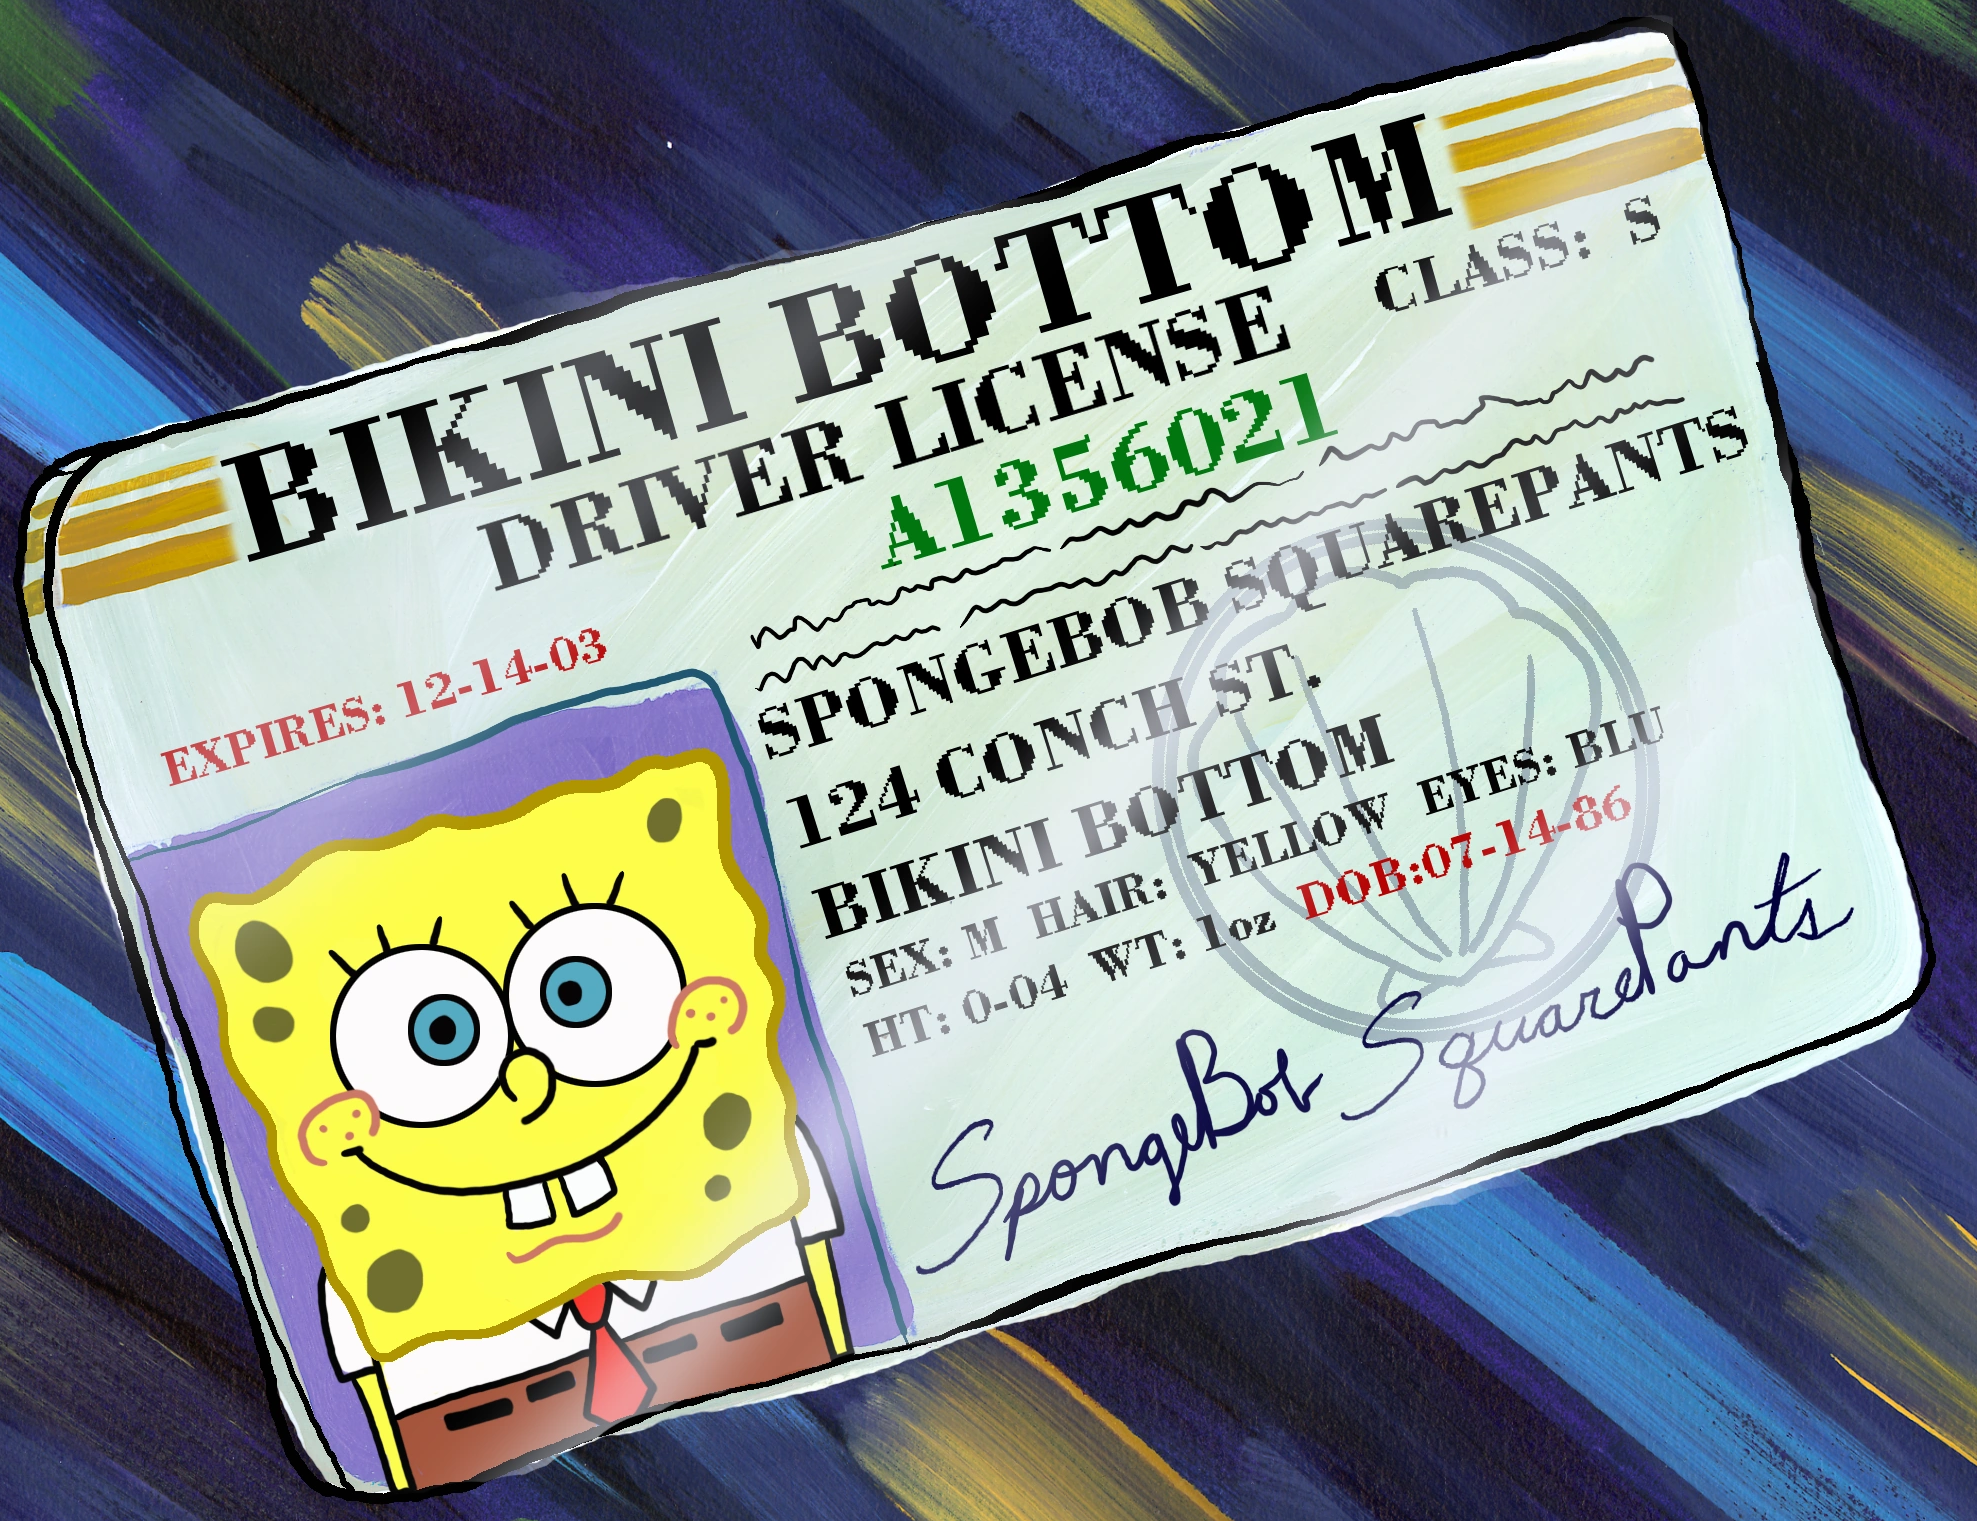 Spongebob Sponge bob  Squarepants License Plate Front Auto Tag Plate